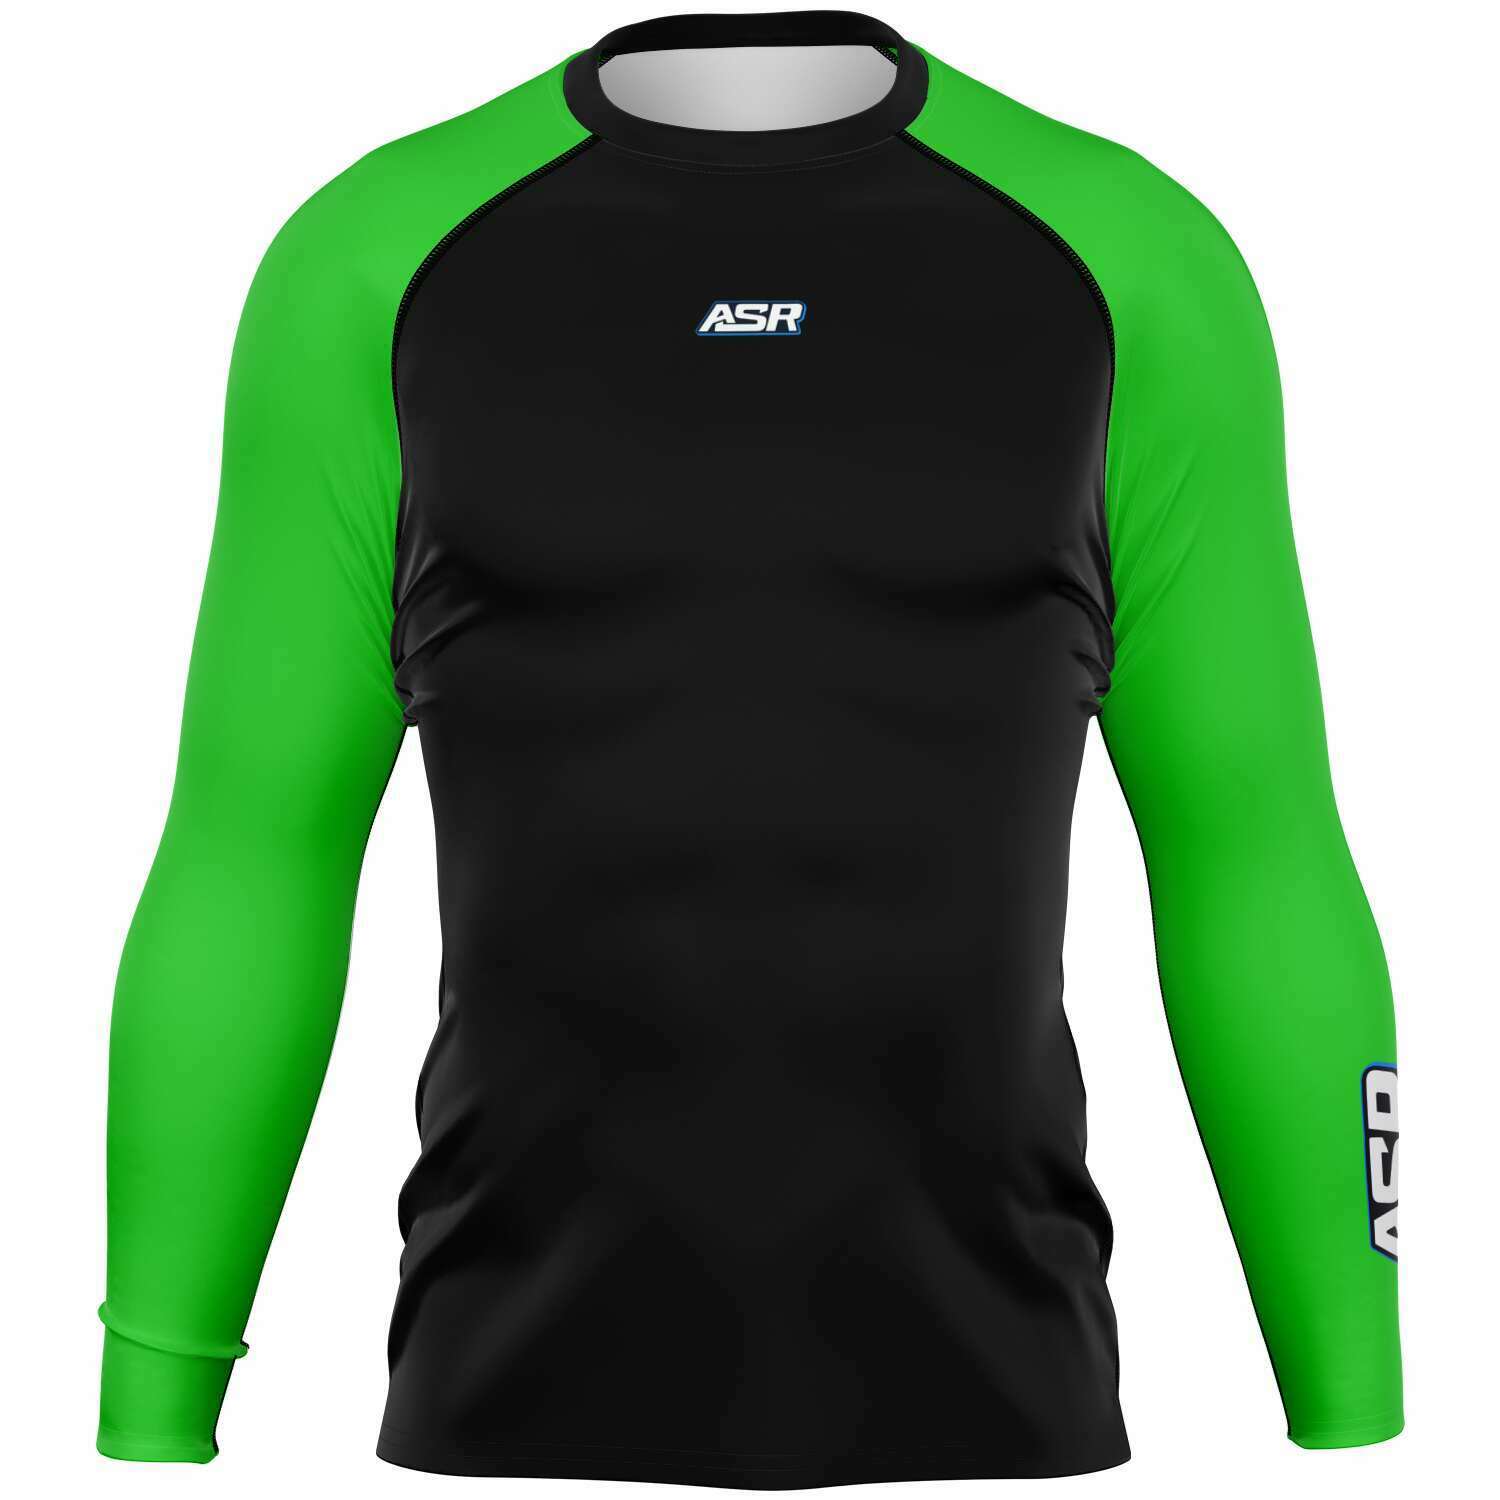 ASR Black / Green Sleeves Performance Compression Top - asracewear